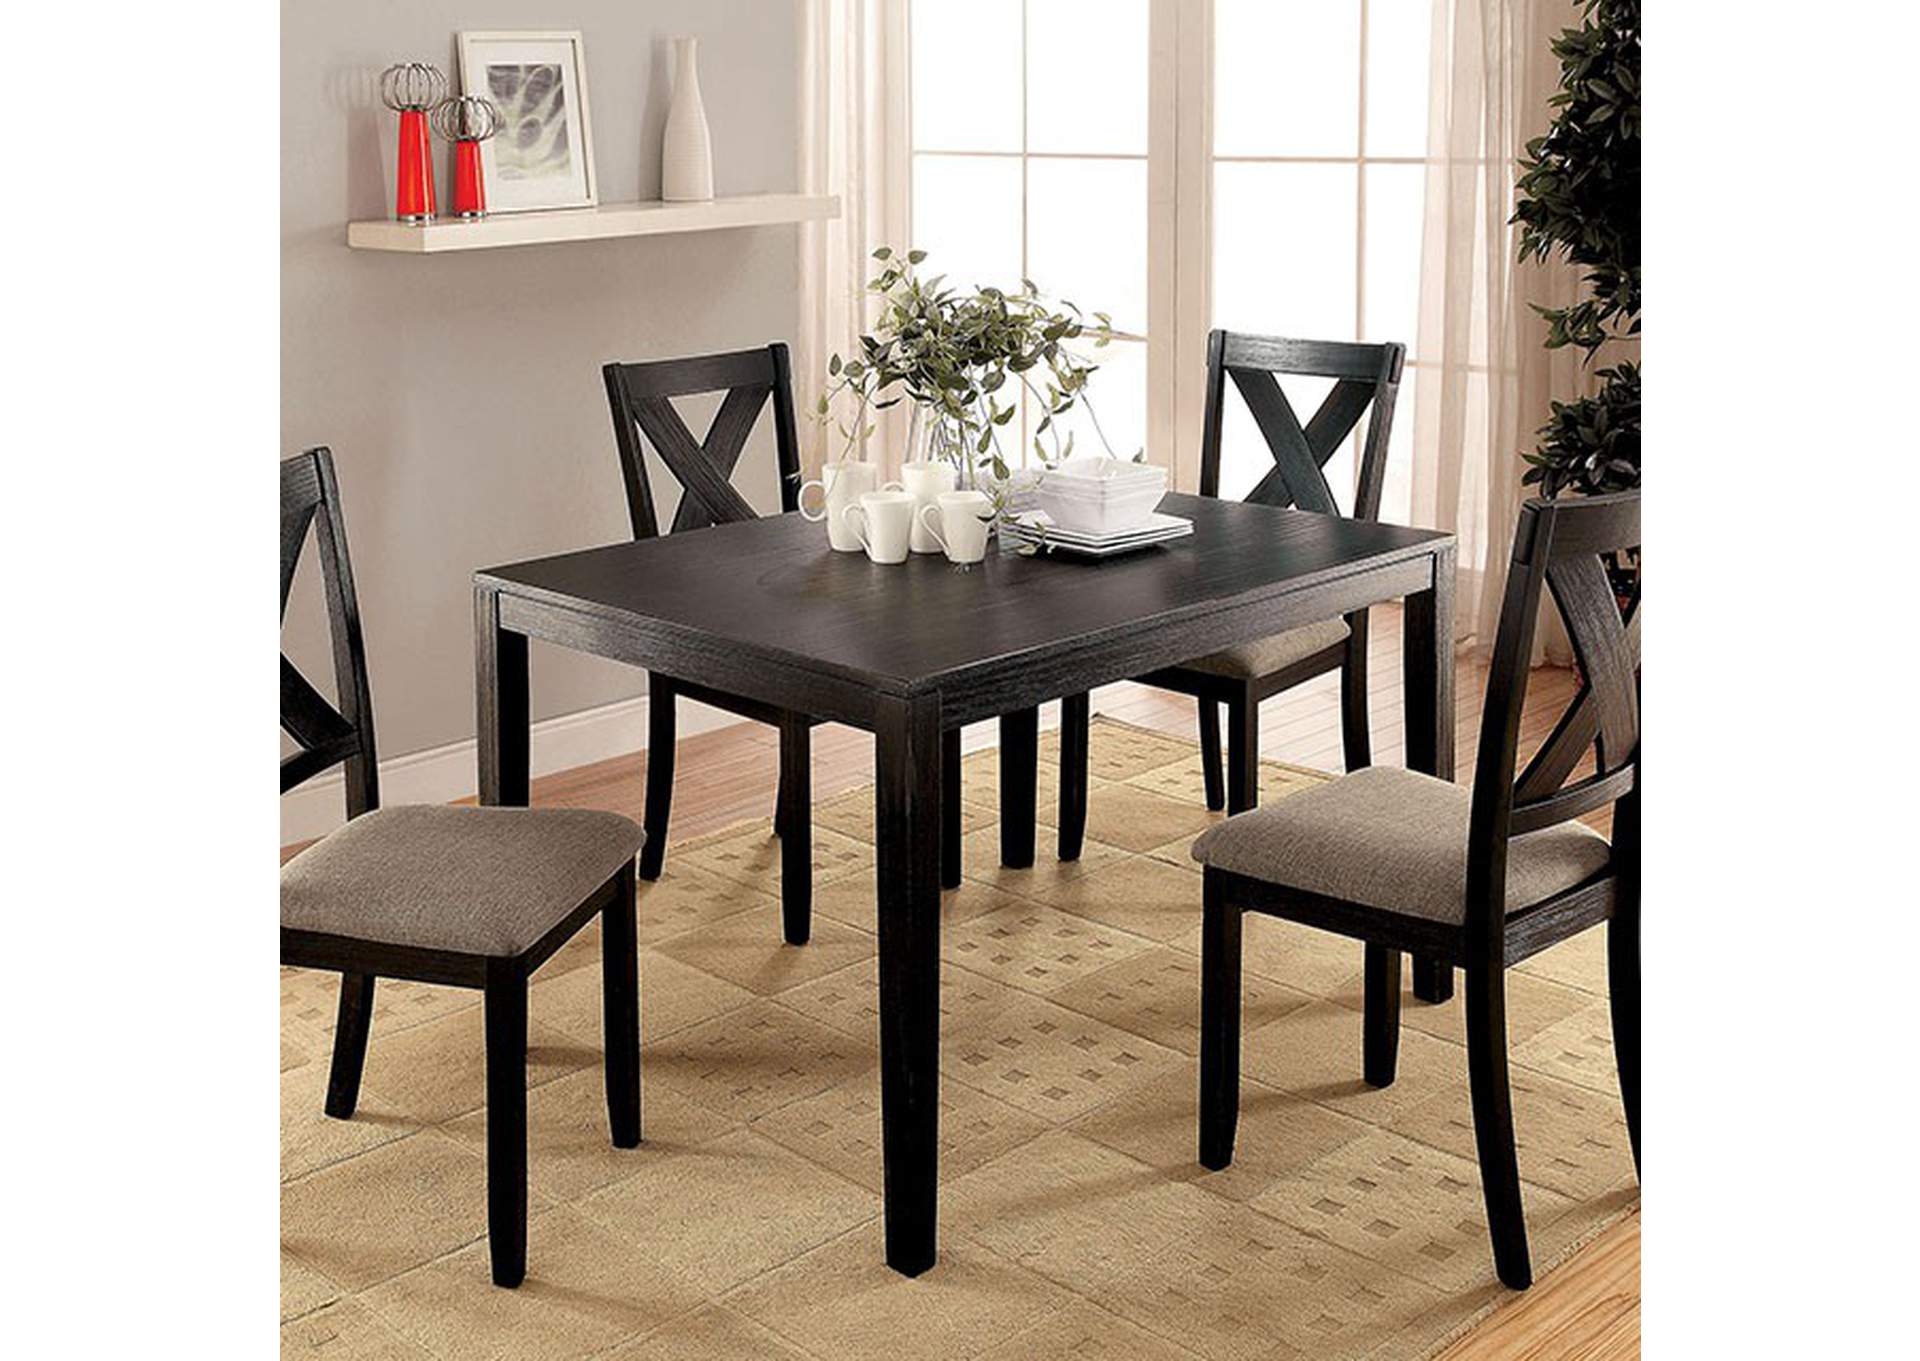 Glenham Brushed Black 5 Piece Dining Table Set,Furniture of America